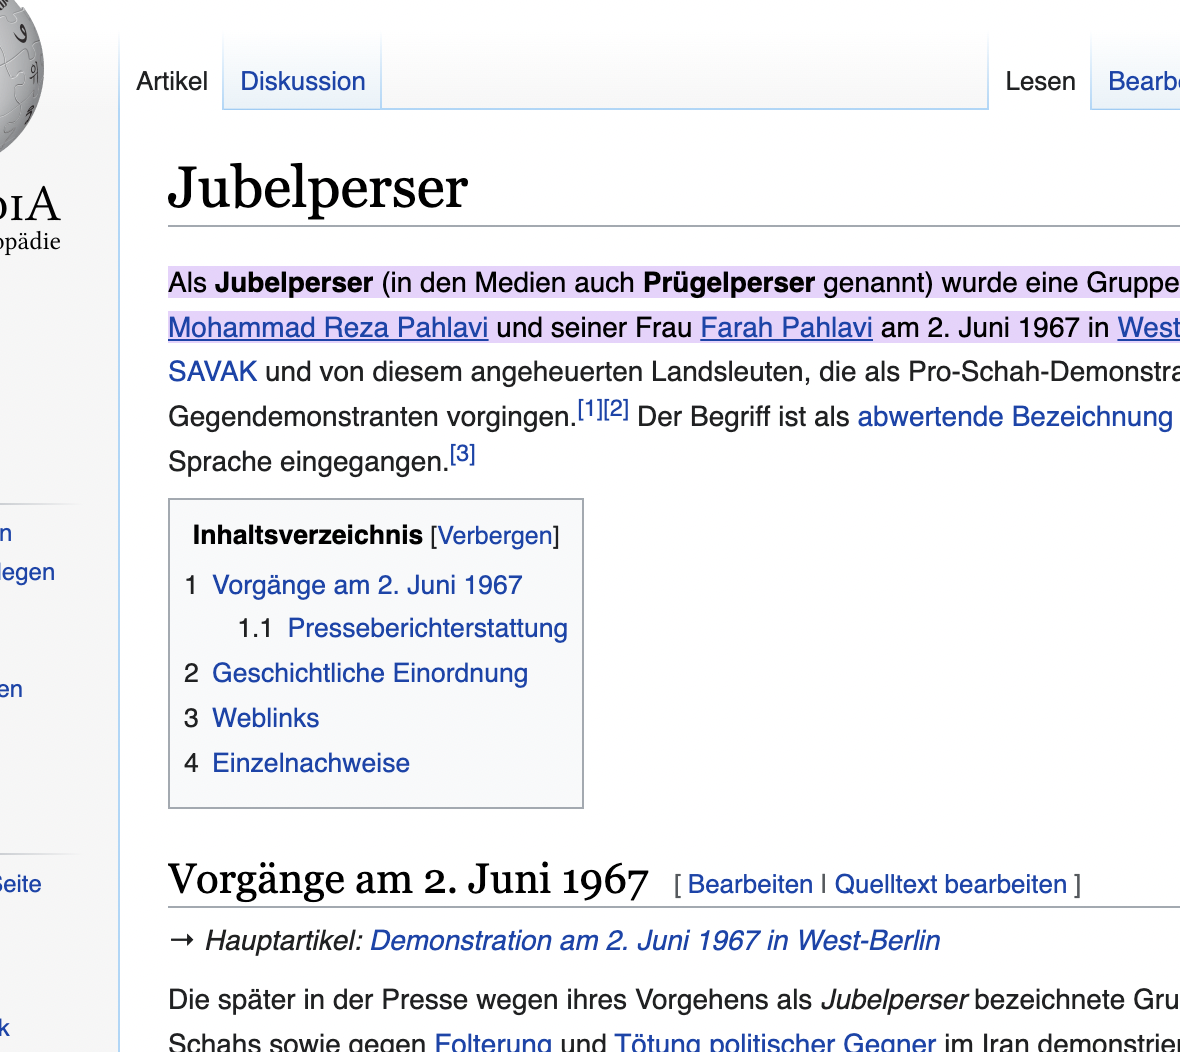 Jubelperser Definition Ausriss Internet Wikipedia